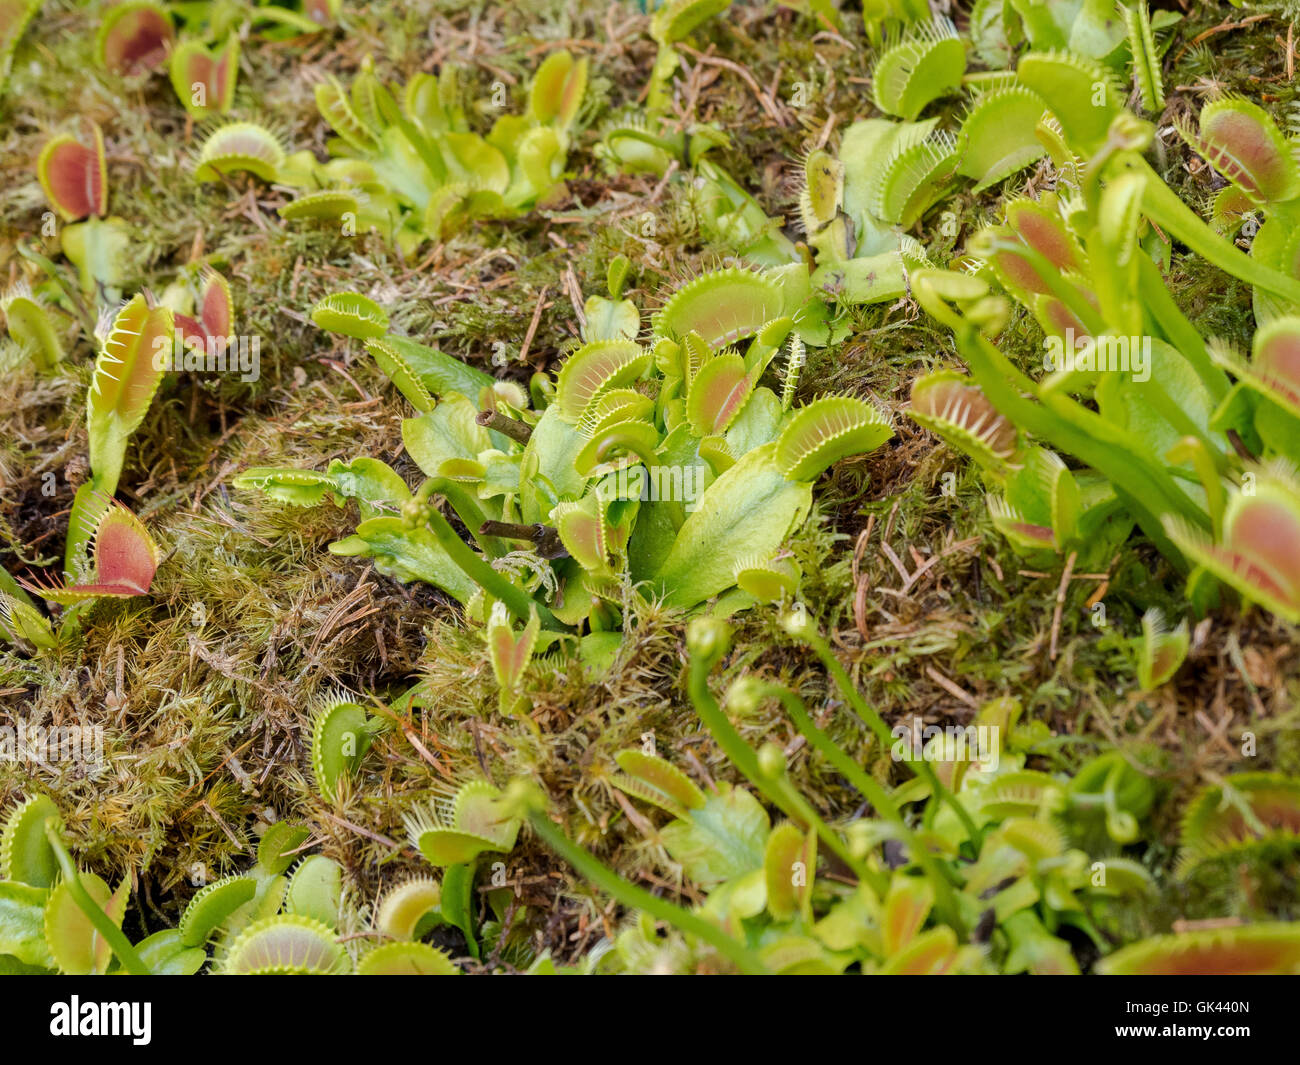 Dionaea muscipula, also known as venus flytrap, carnivorous plant assortment, green colors Stock Photo